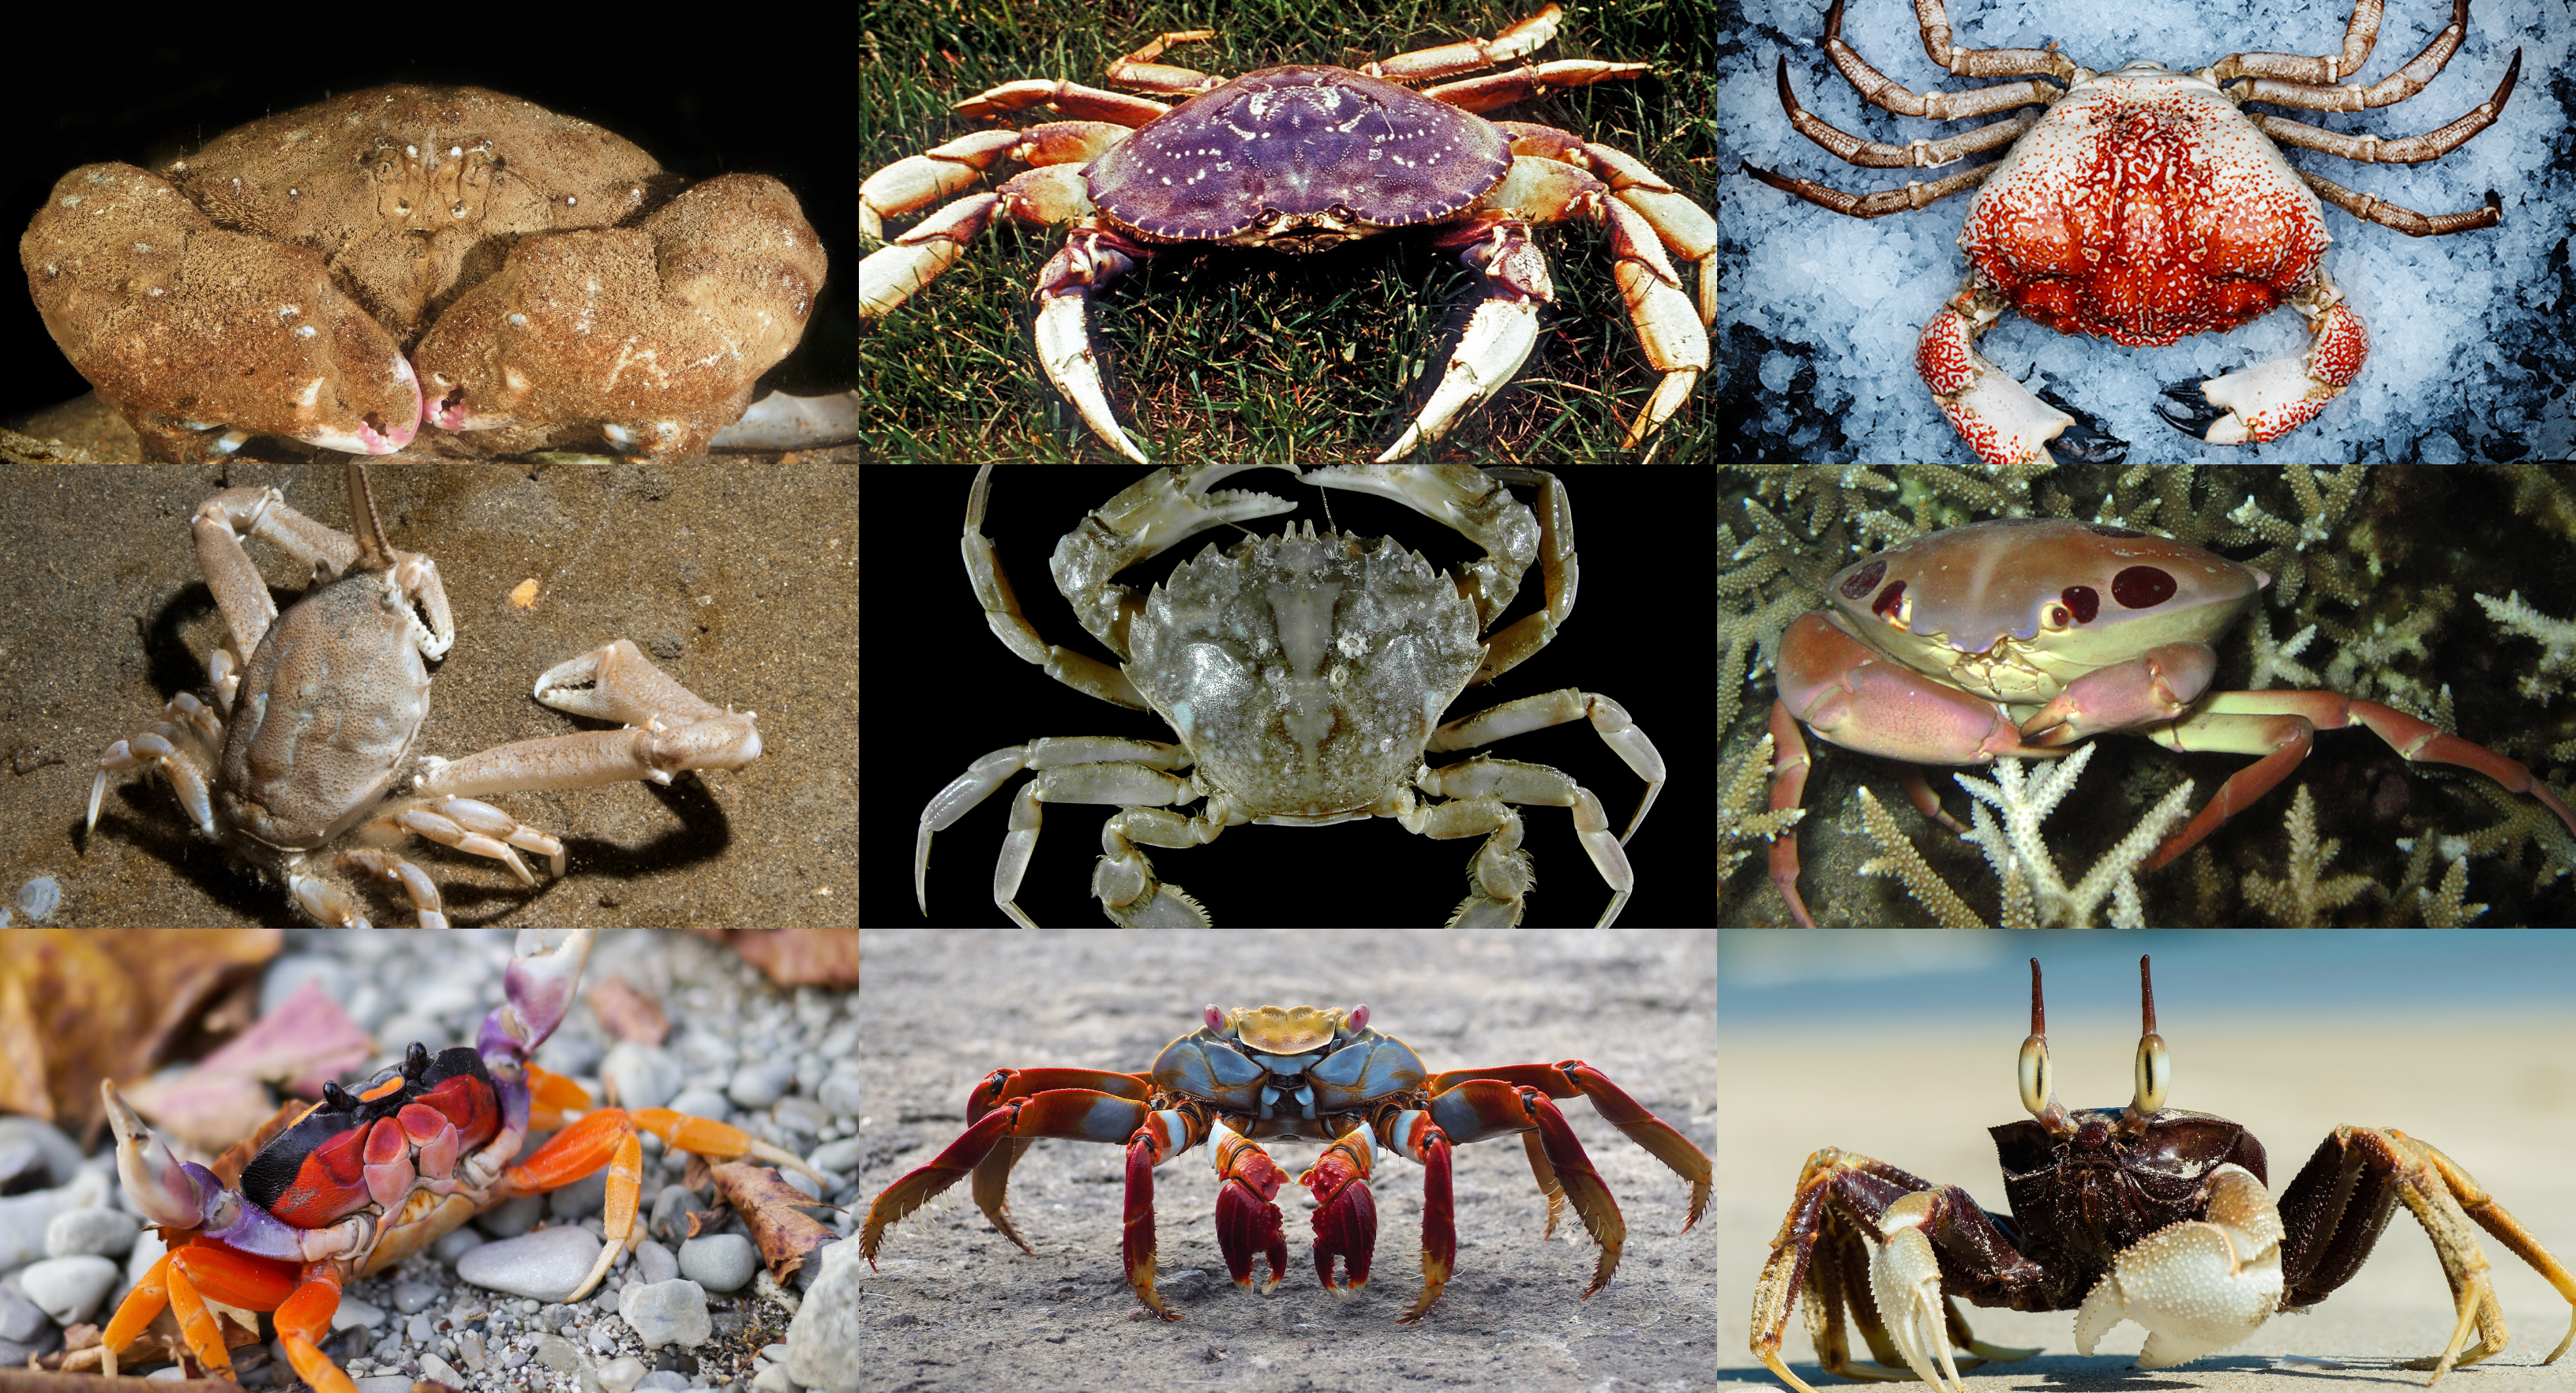 Crab - Wikipedia